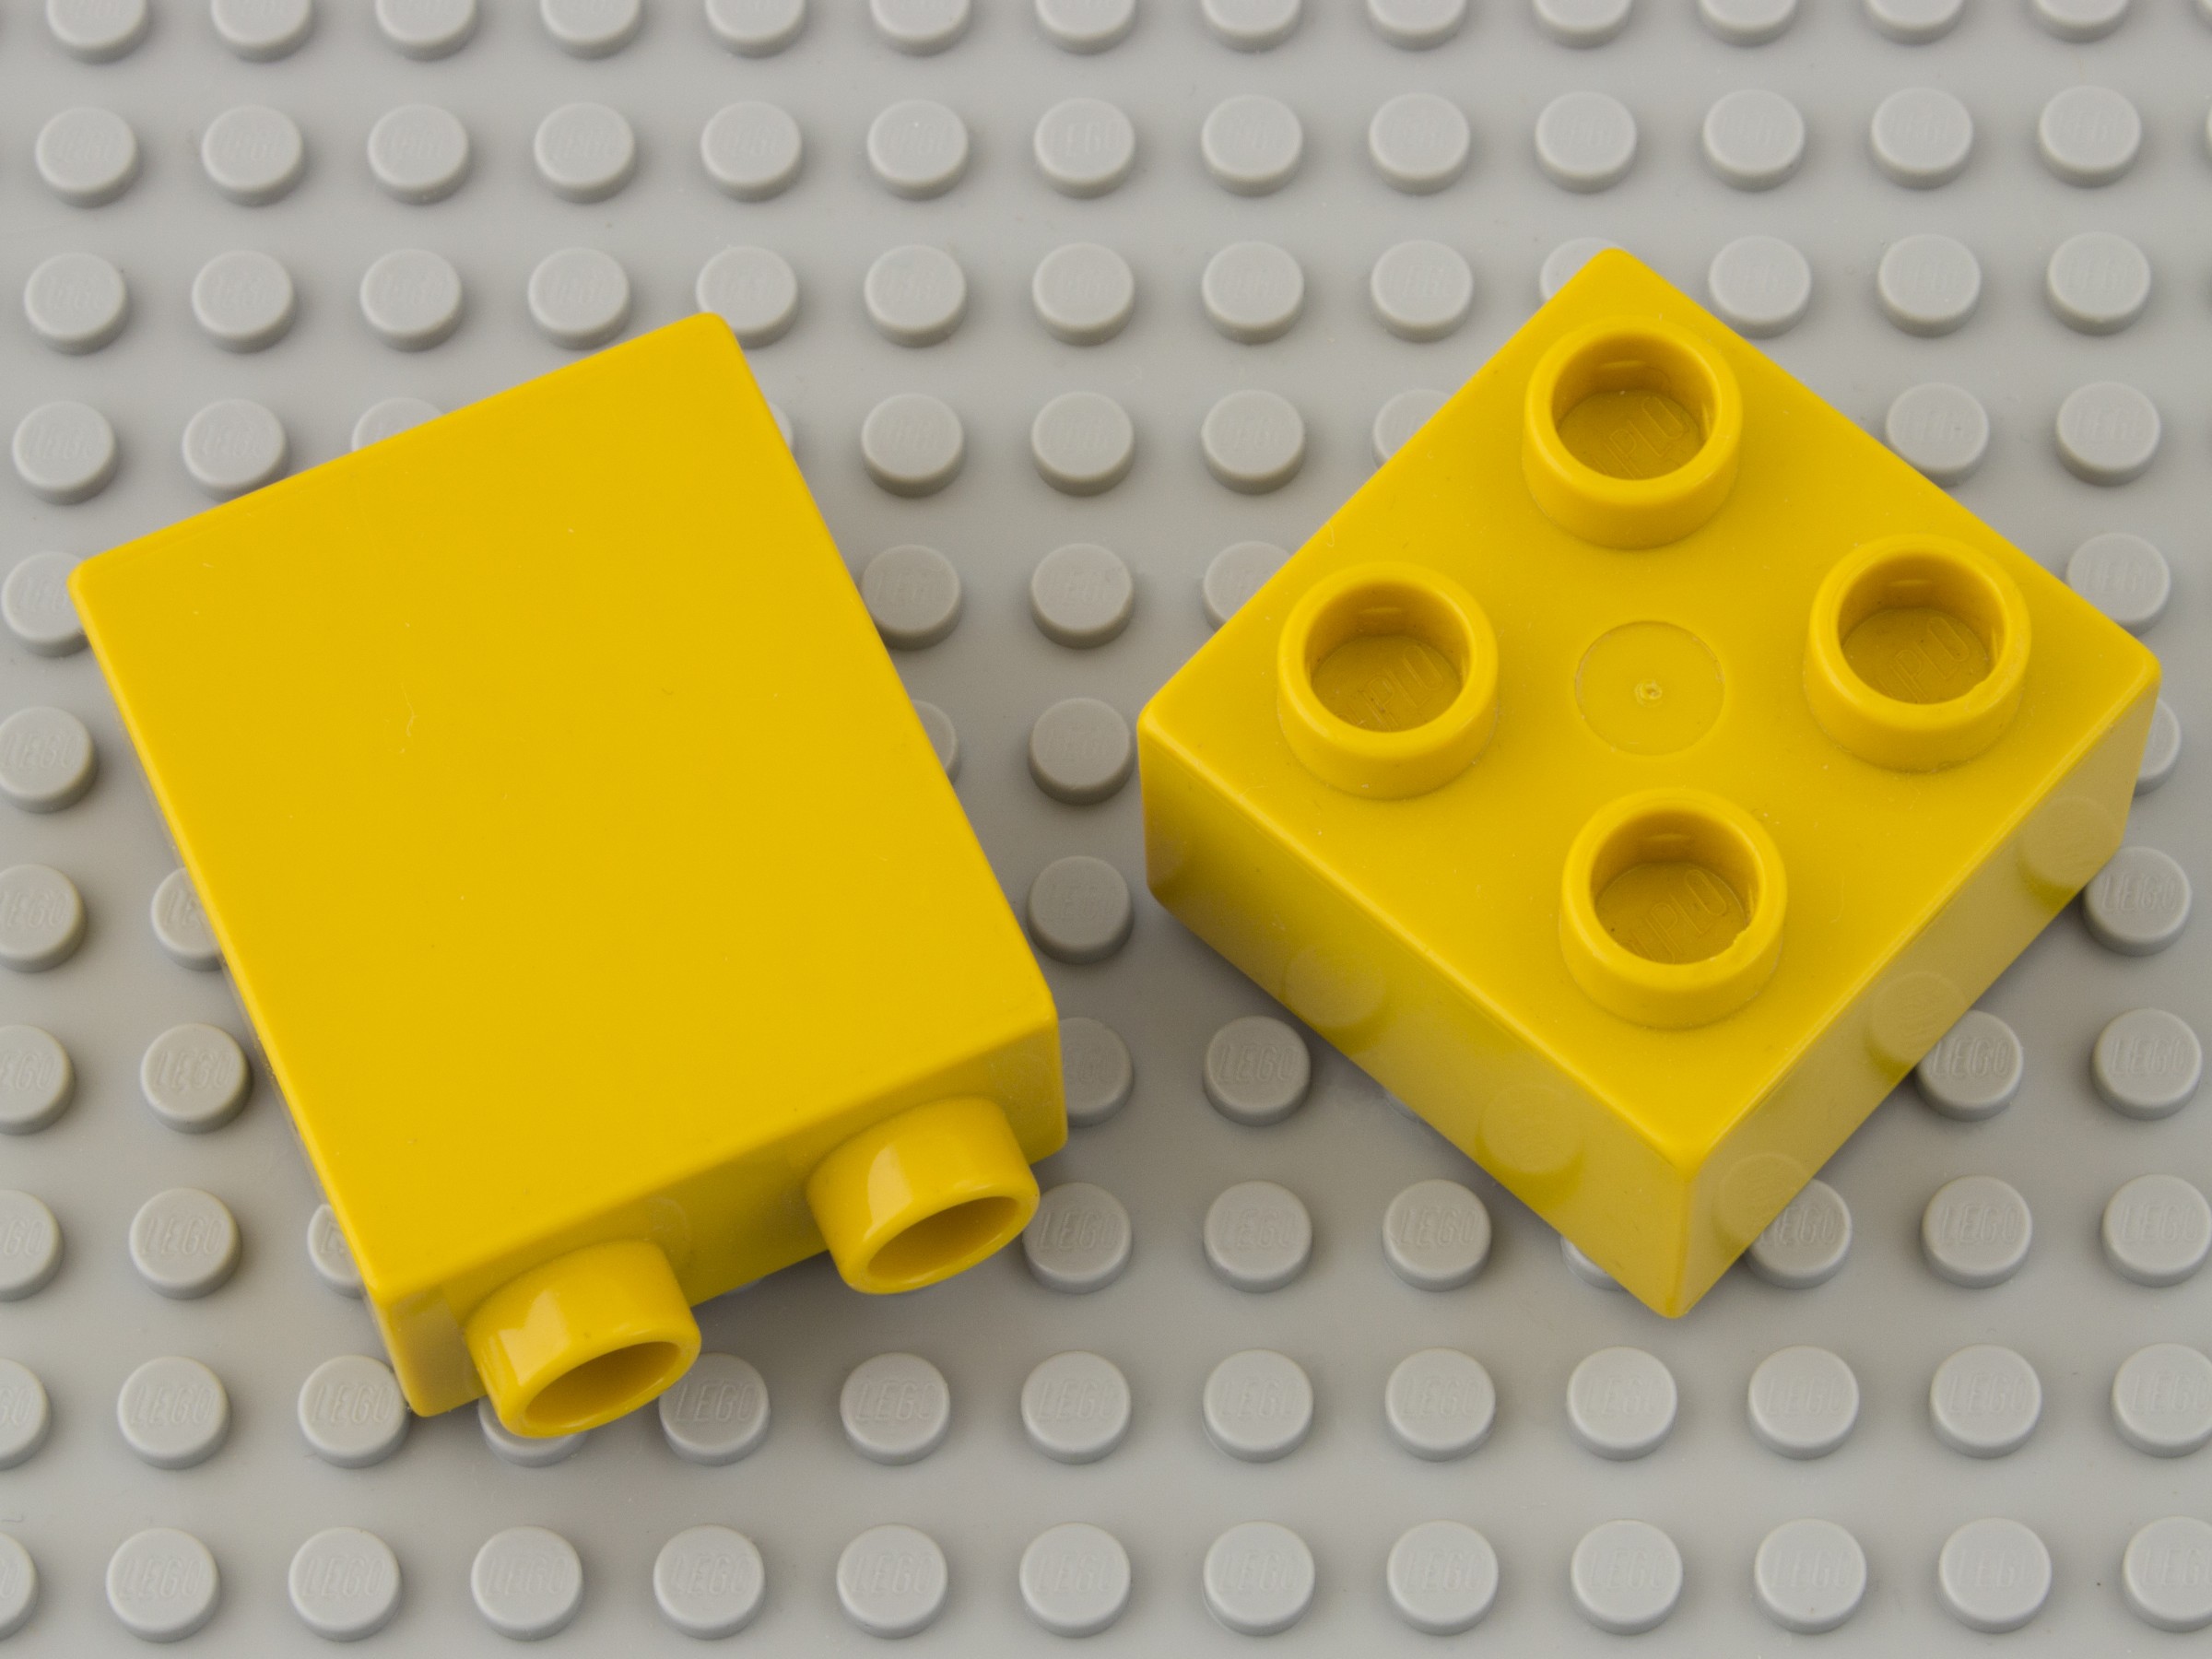 garage violin Mejeriprodukter Yellow | Brickset: LEGO set guide and database